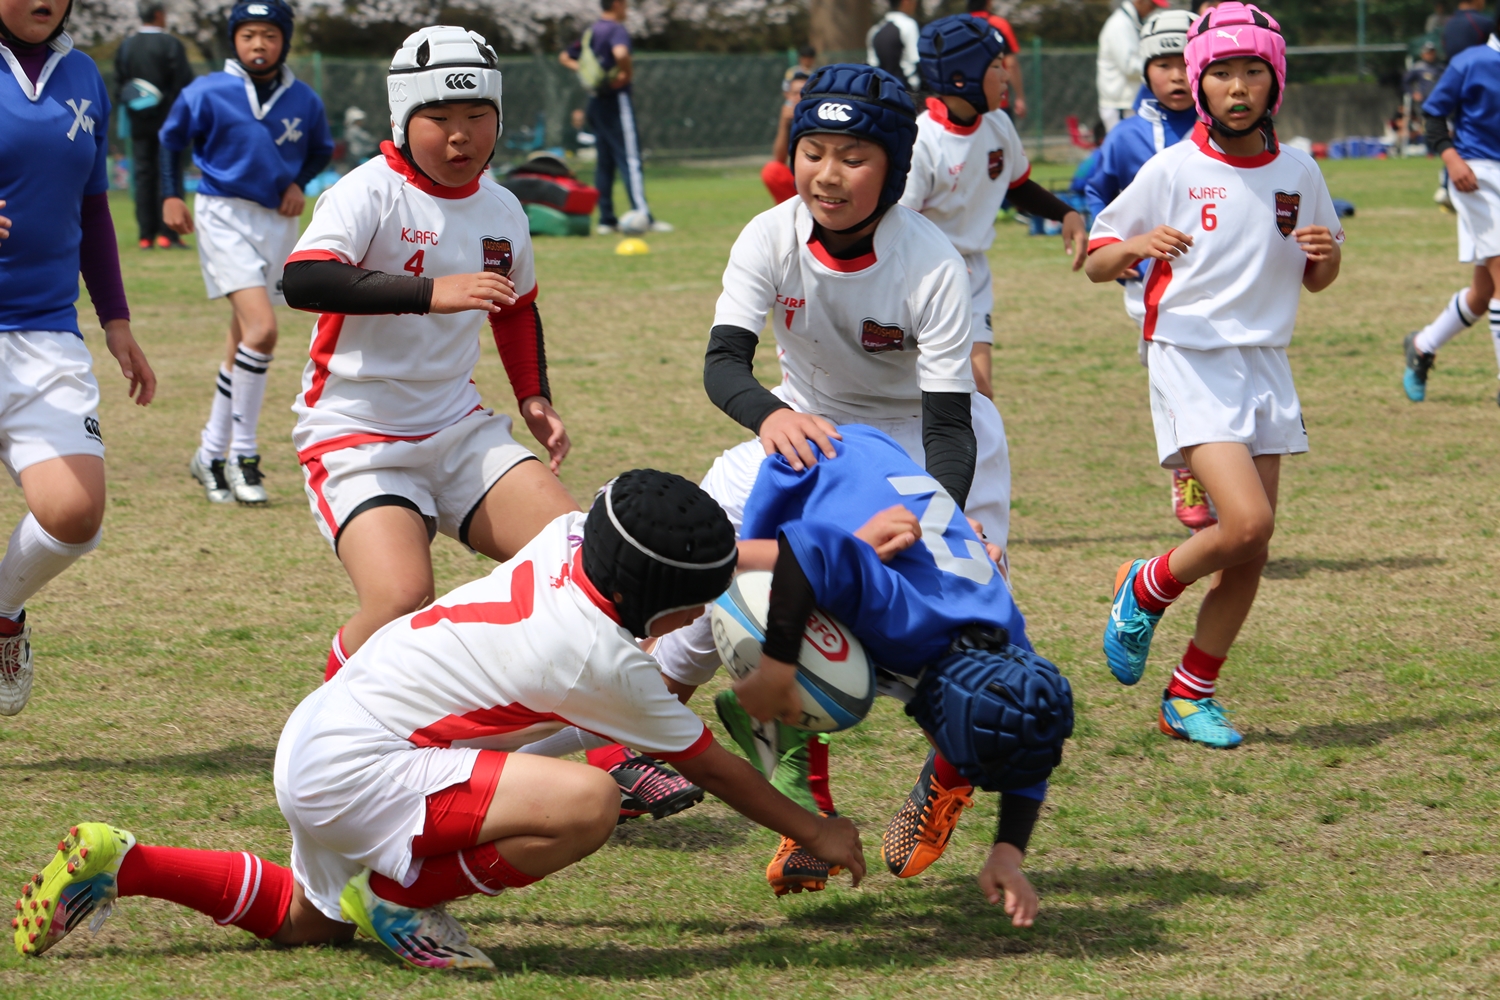 youngwave_kitakyusyu_rugby_school_kasugahai2016051.JPG